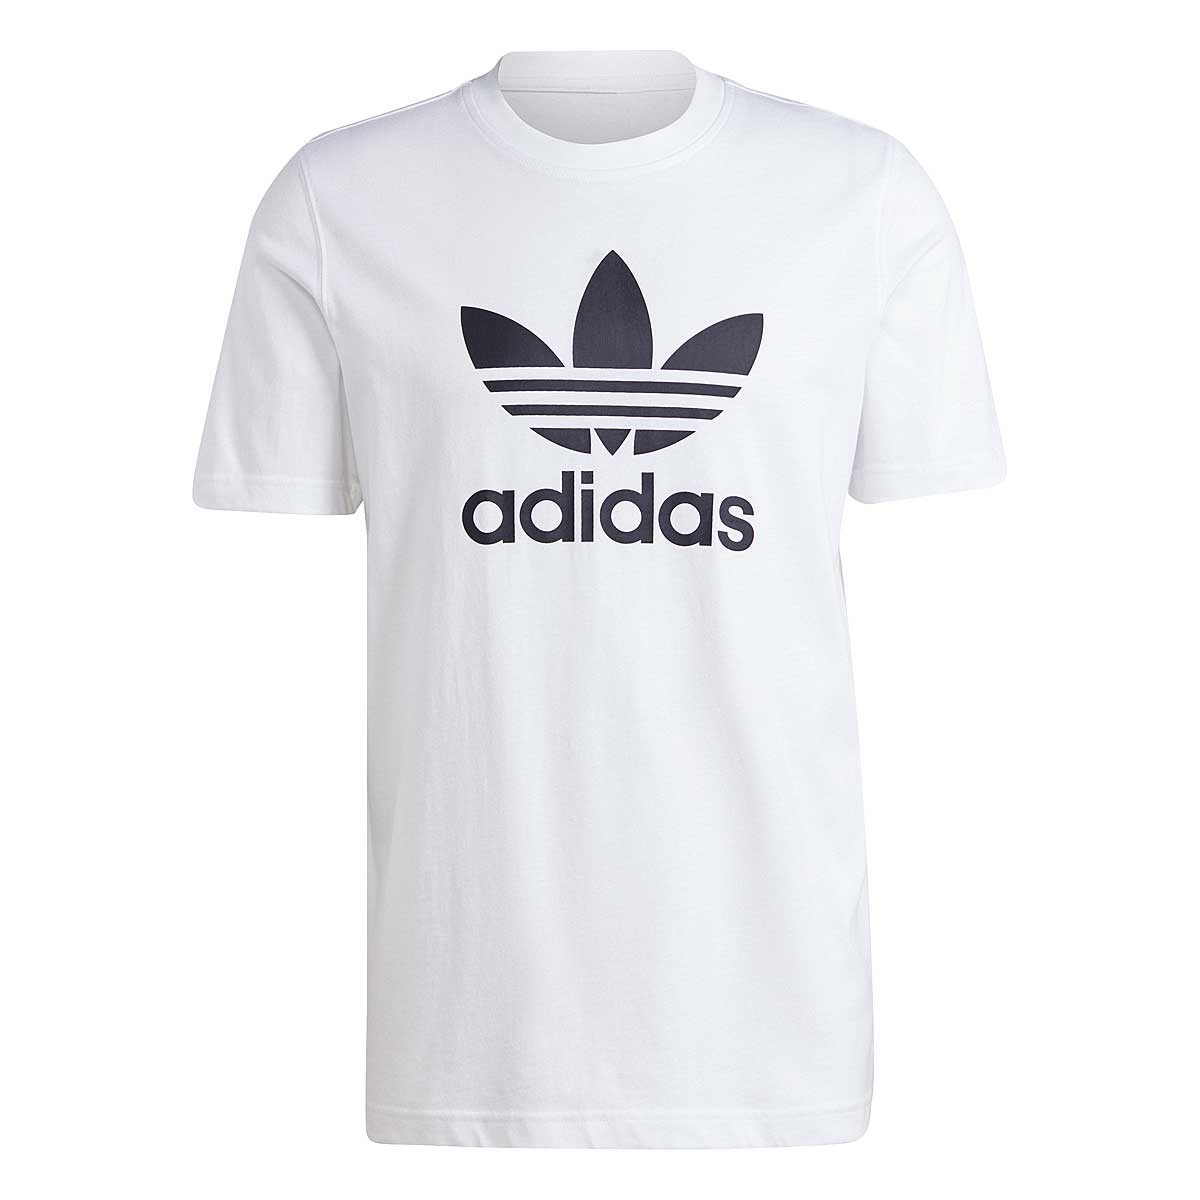 Adidas Trefoil T-shirt, Weiß/schwarz L